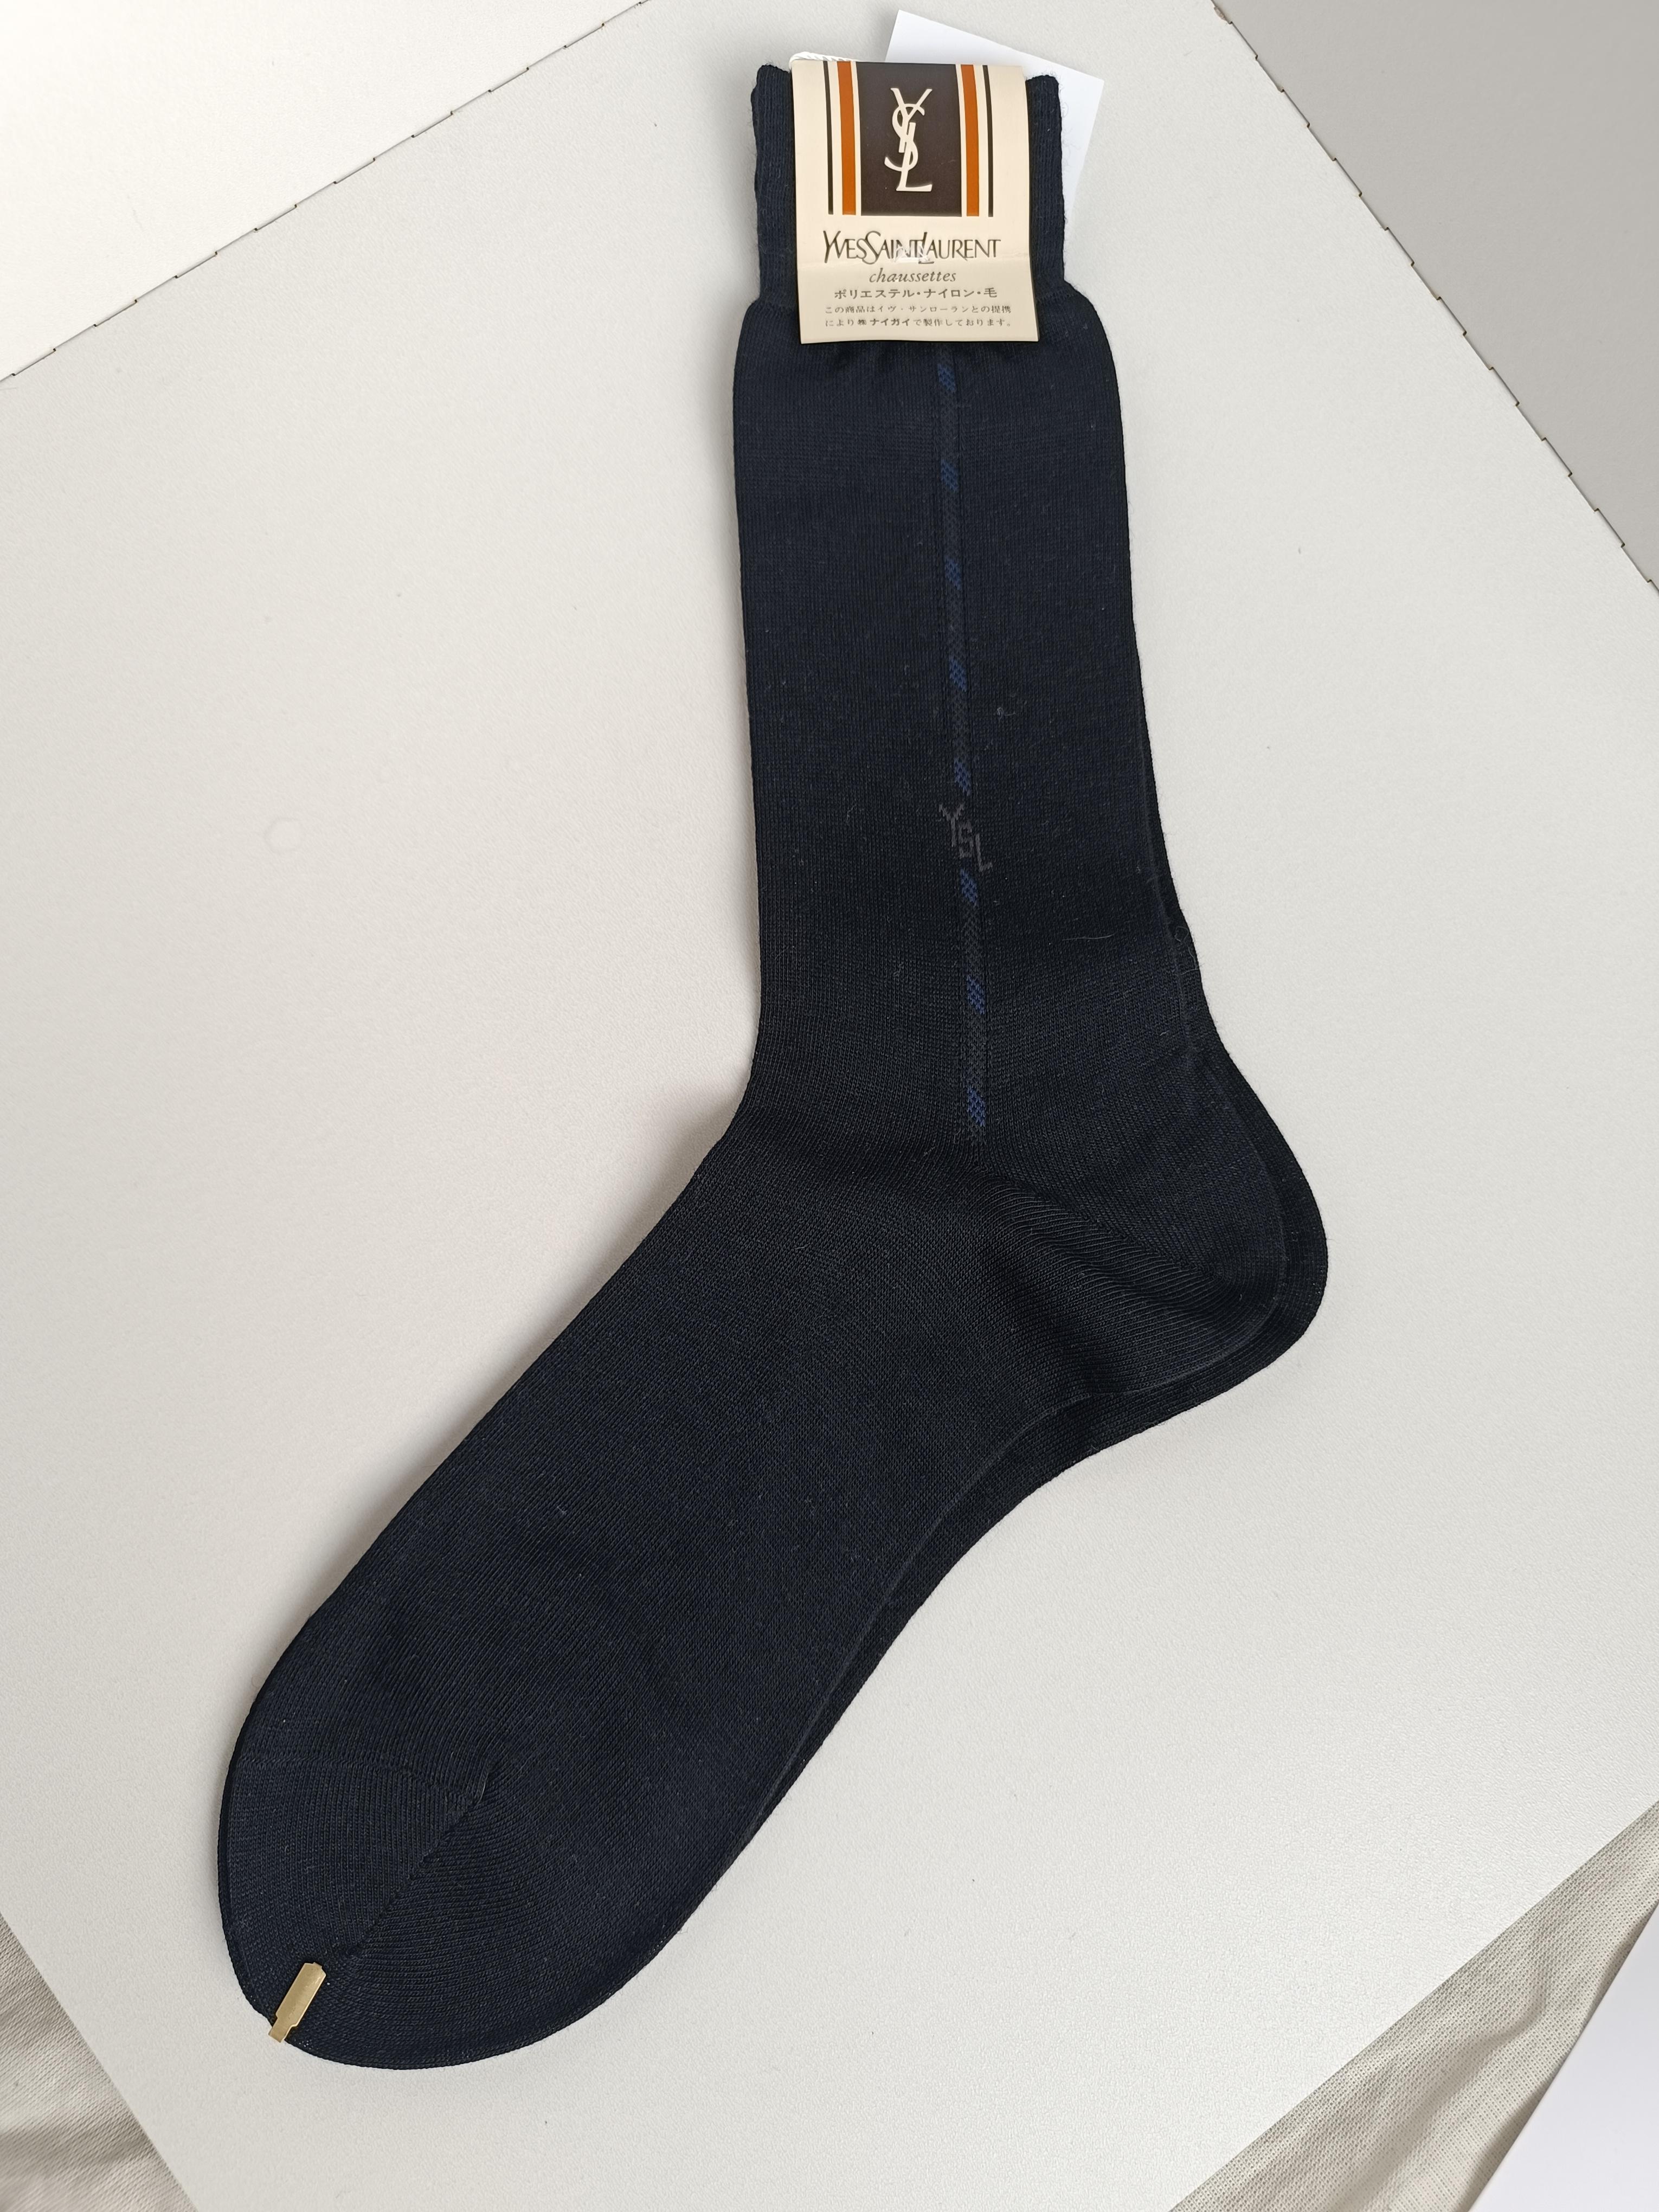 Authentic Yves Saint Laurent Vintage Men’s Socks In New Condition For Sale In Алматинский Почтамт, KZ